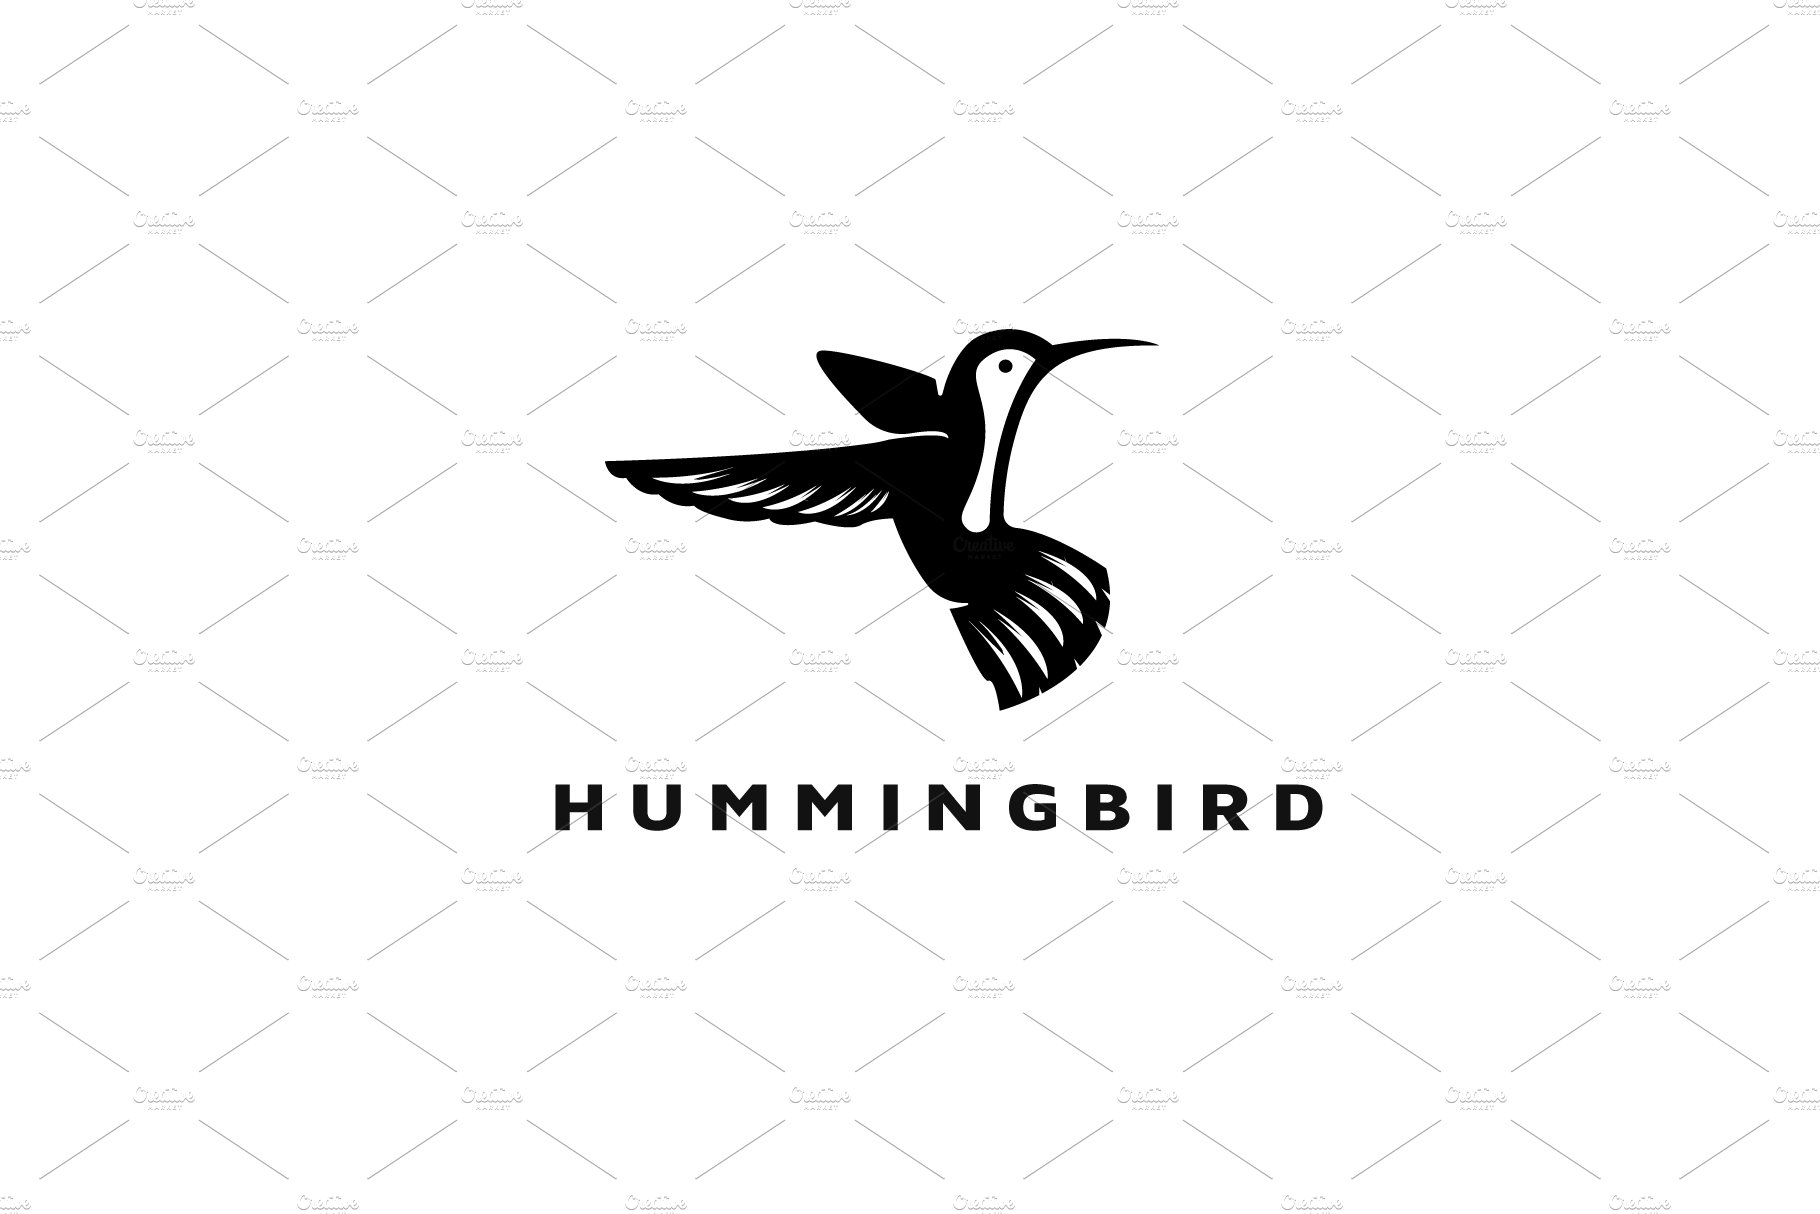 Hummingbird logo cover image.